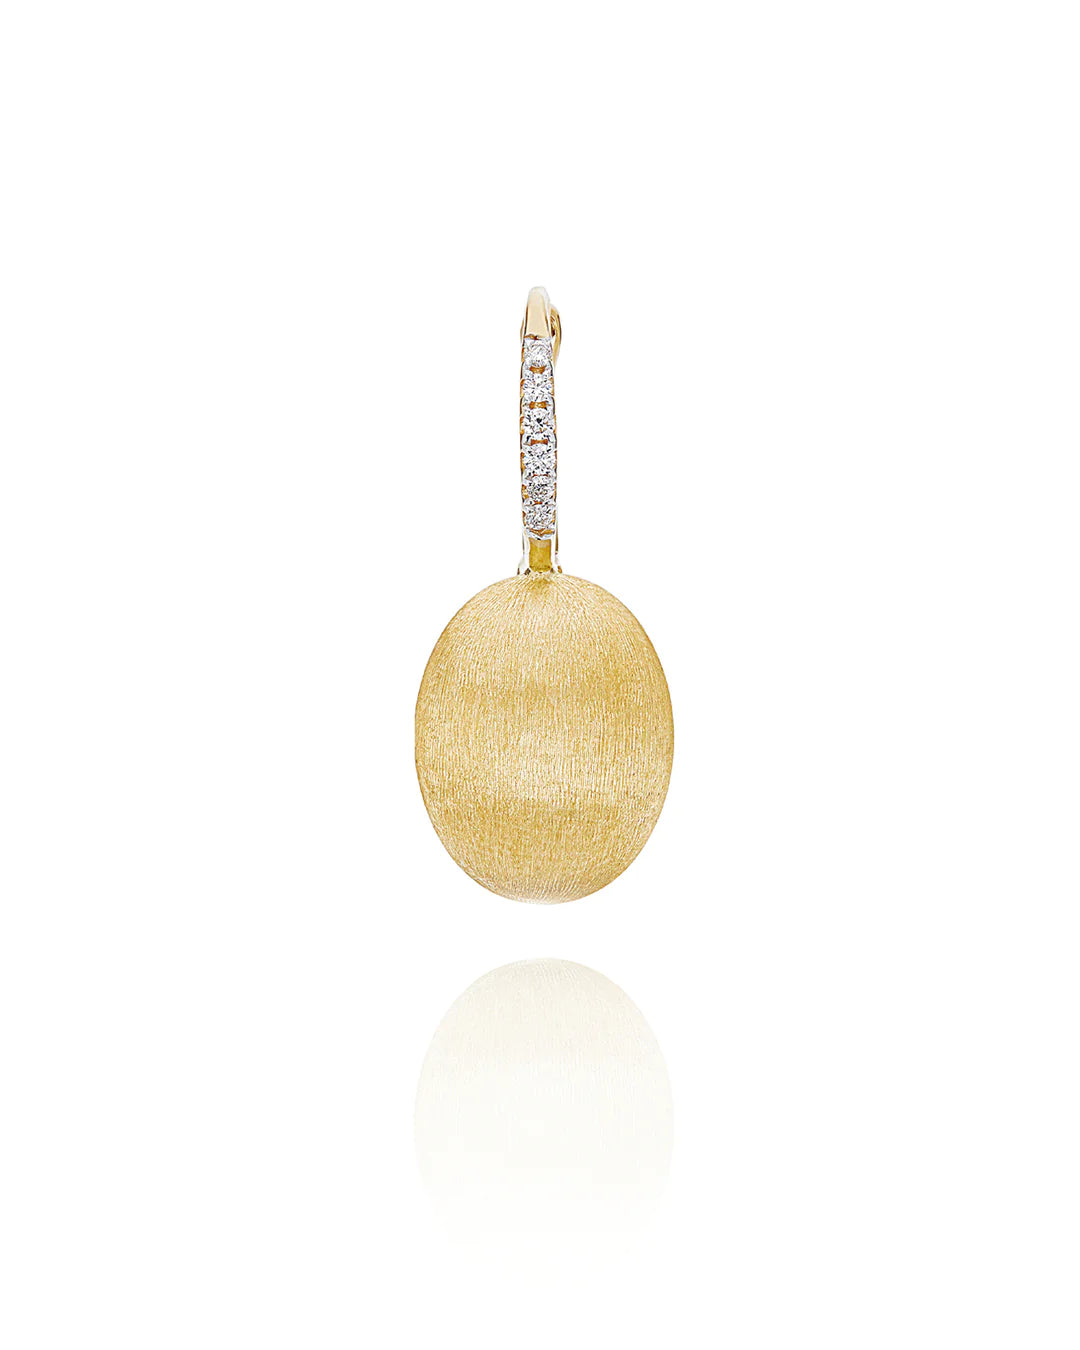 "CILIEGINA" GOLD BALL DROP SINGLE EARRING WITH DIAMONDS DETAILS (MEDIUM)